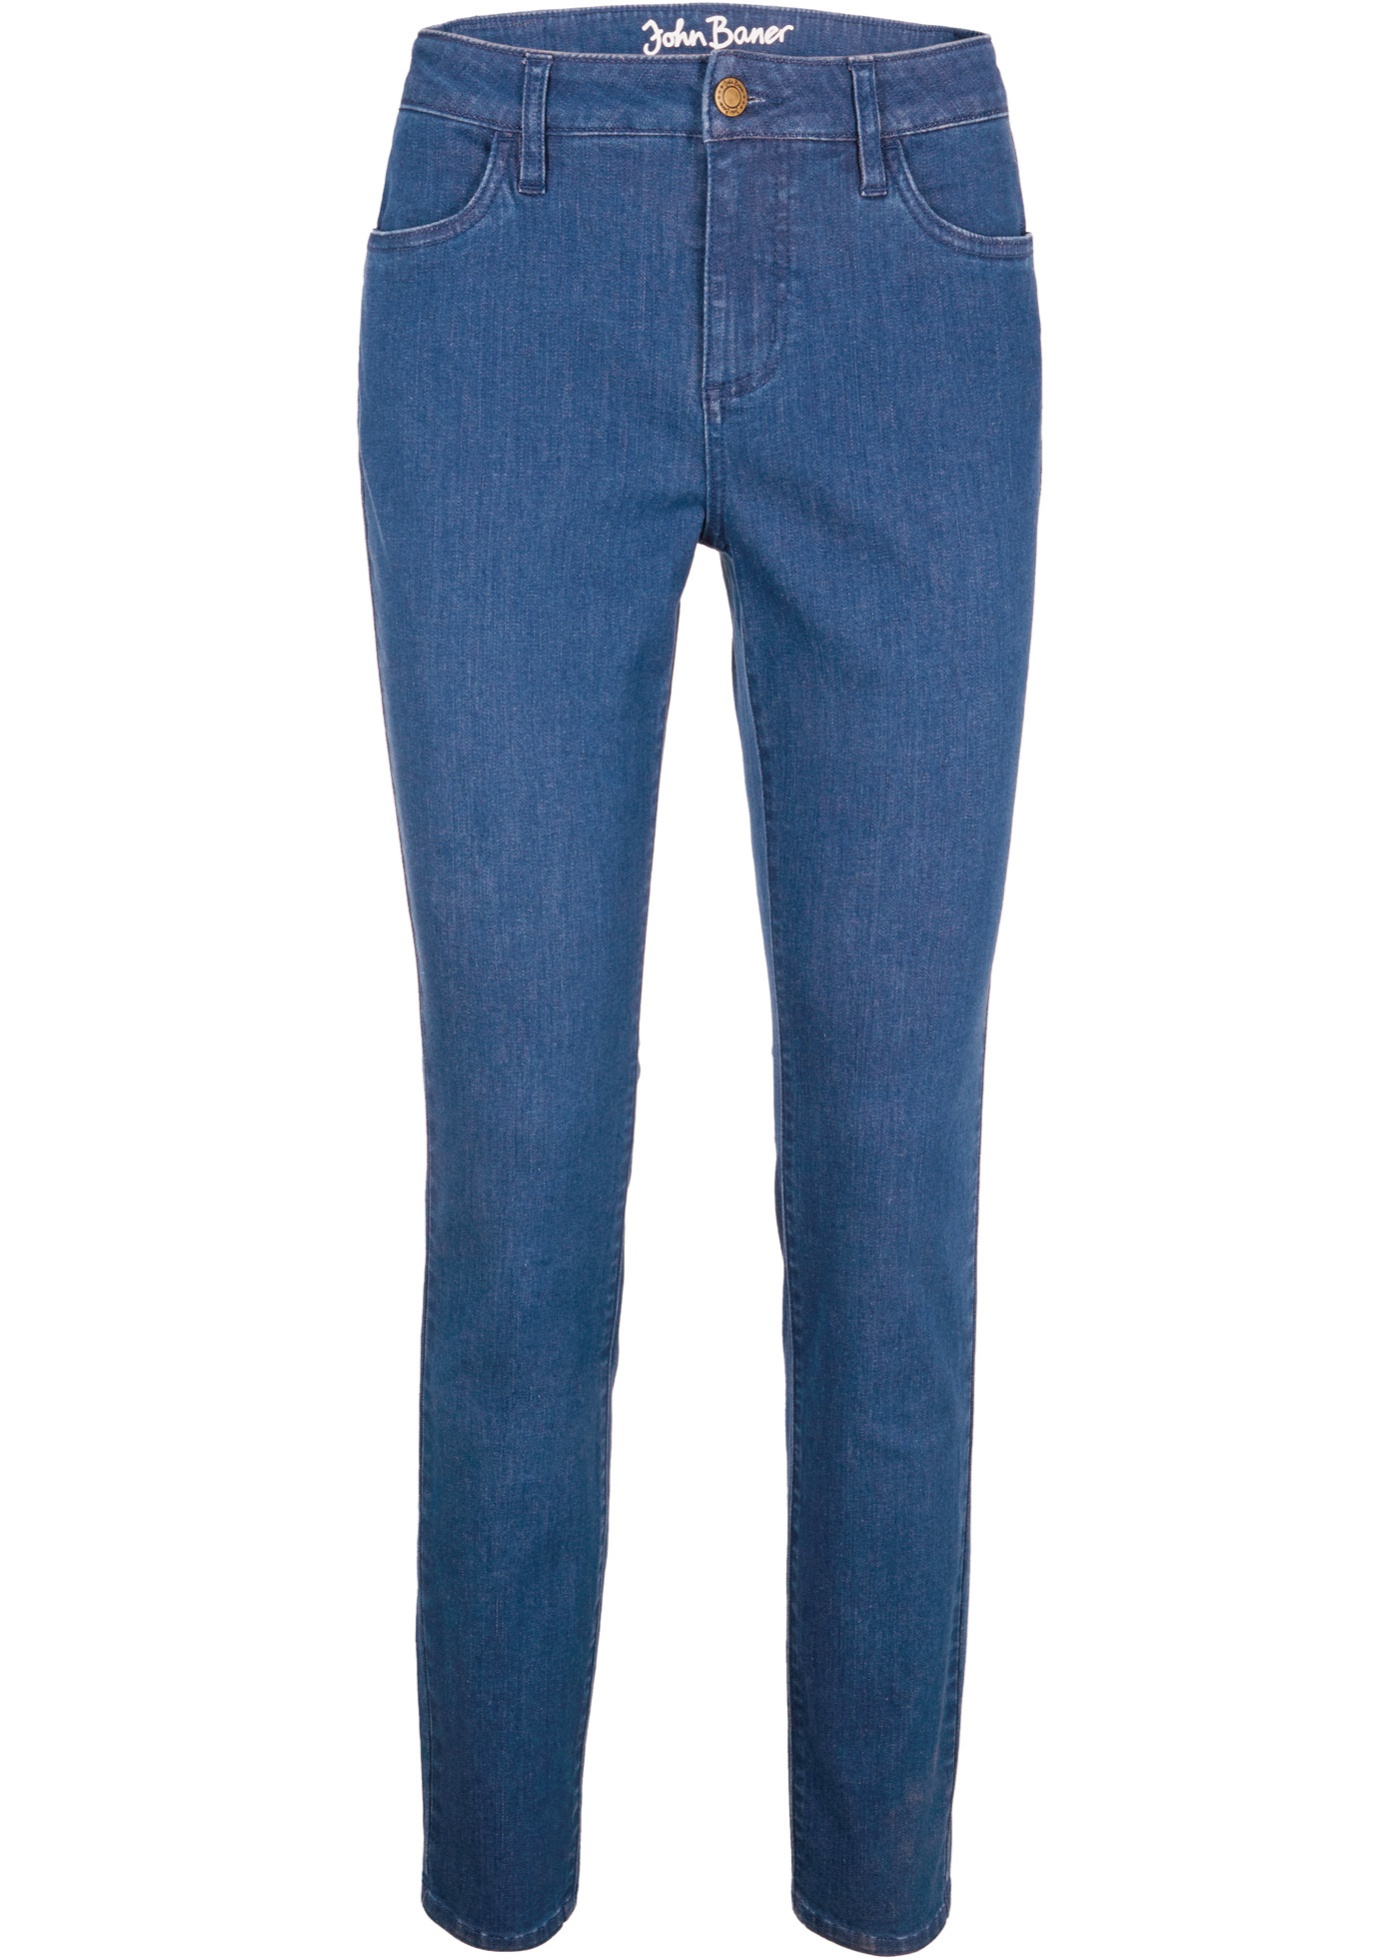 Corrigerende super stretch jeans met T400, skinny